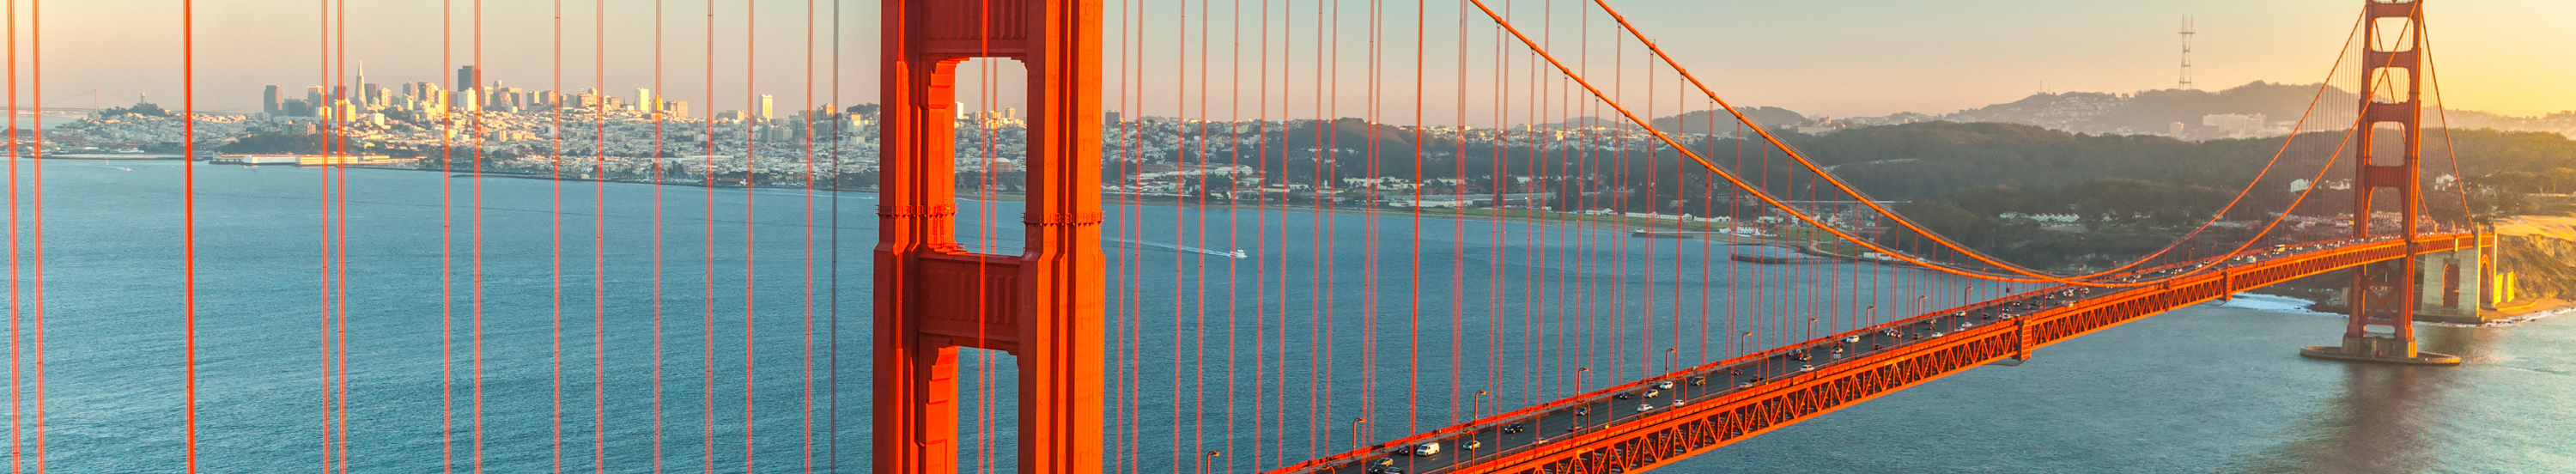 Puente Golden Gate, San Francisco.